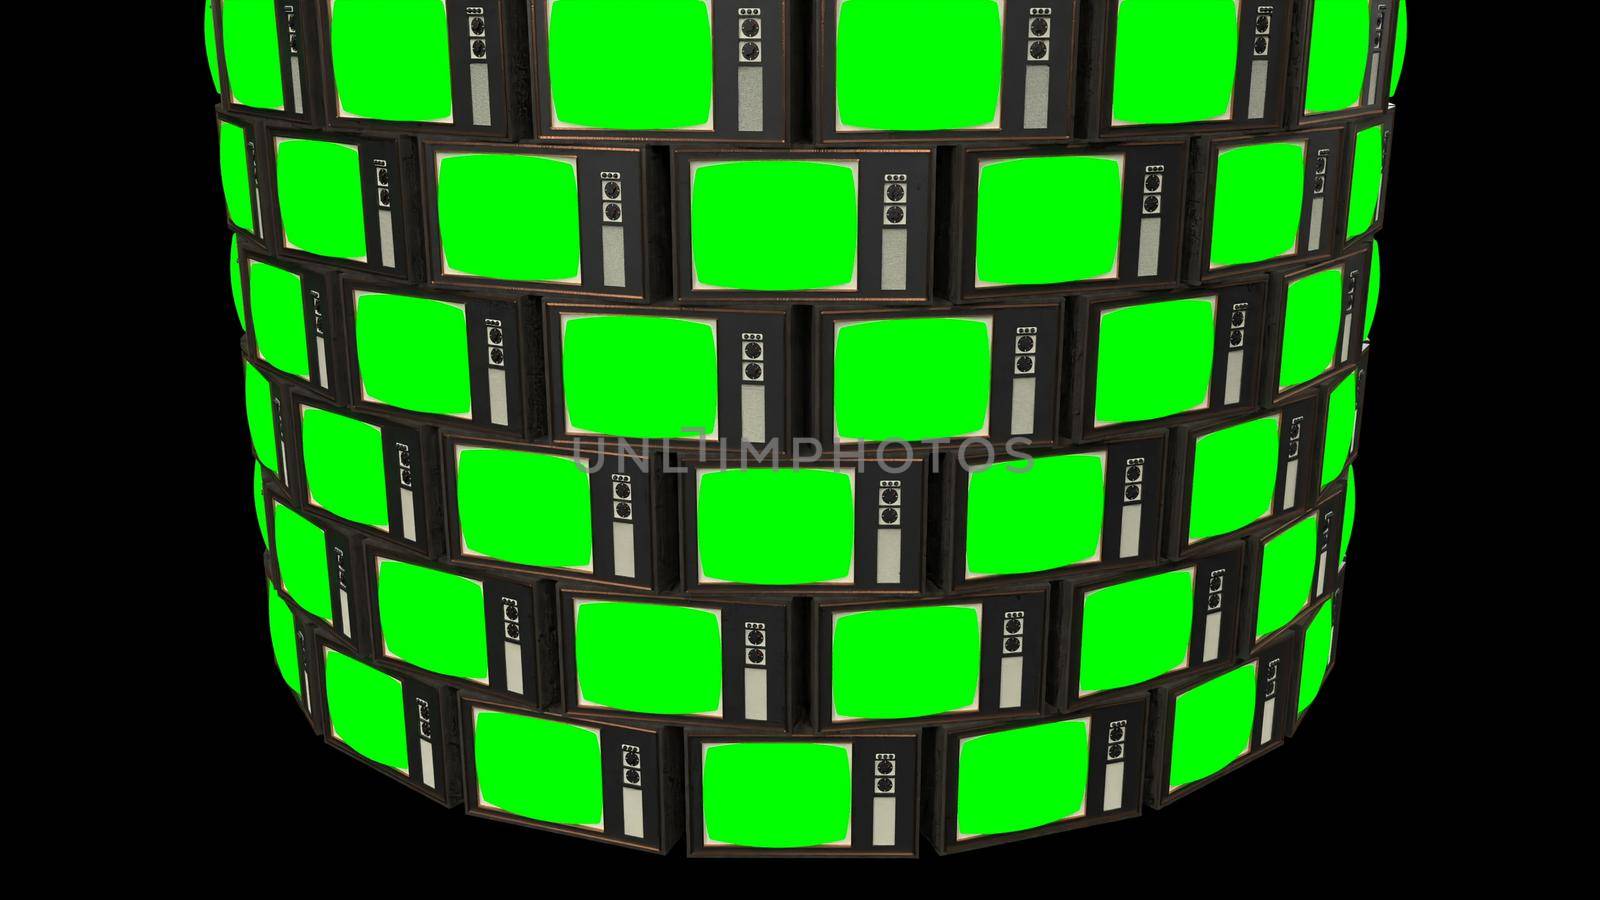 Old tv green screen Retro 80s 90s vintage background. Chroma key 3d render